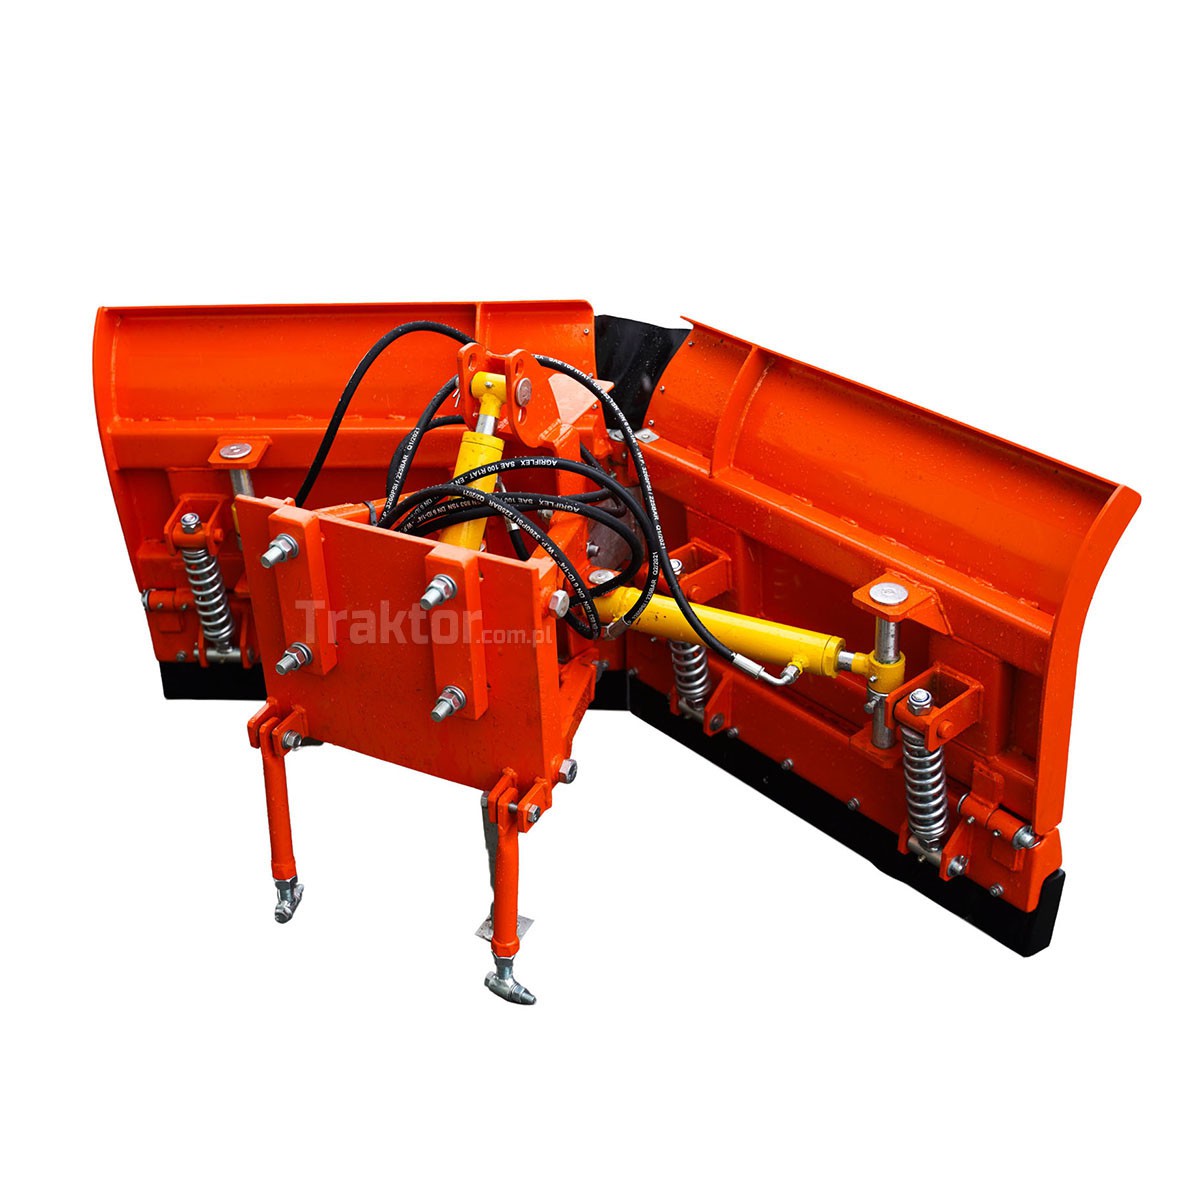 Arrow snow plow 180 cm, hydraulic, with 4FARMER mounting plate